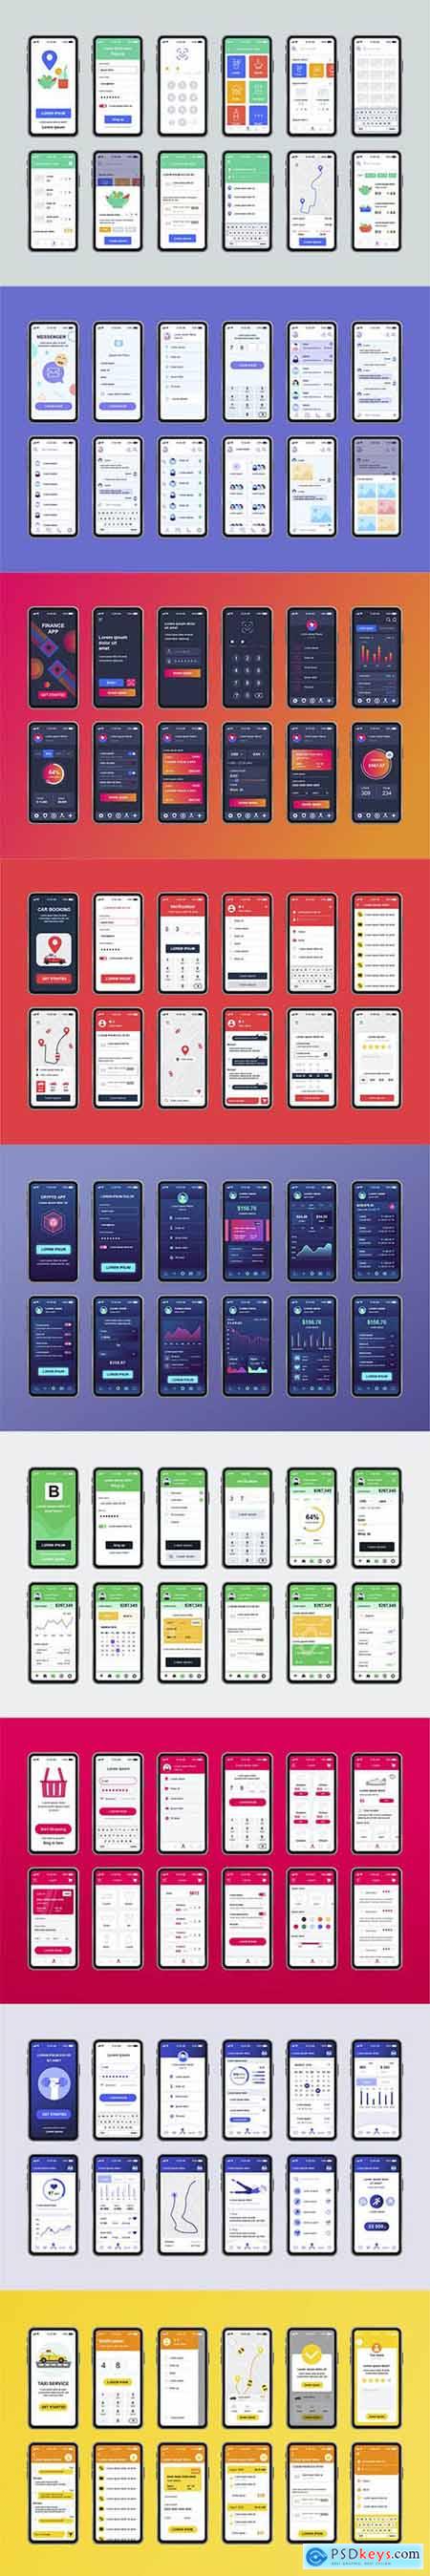 Mobile App UI Kits Pack